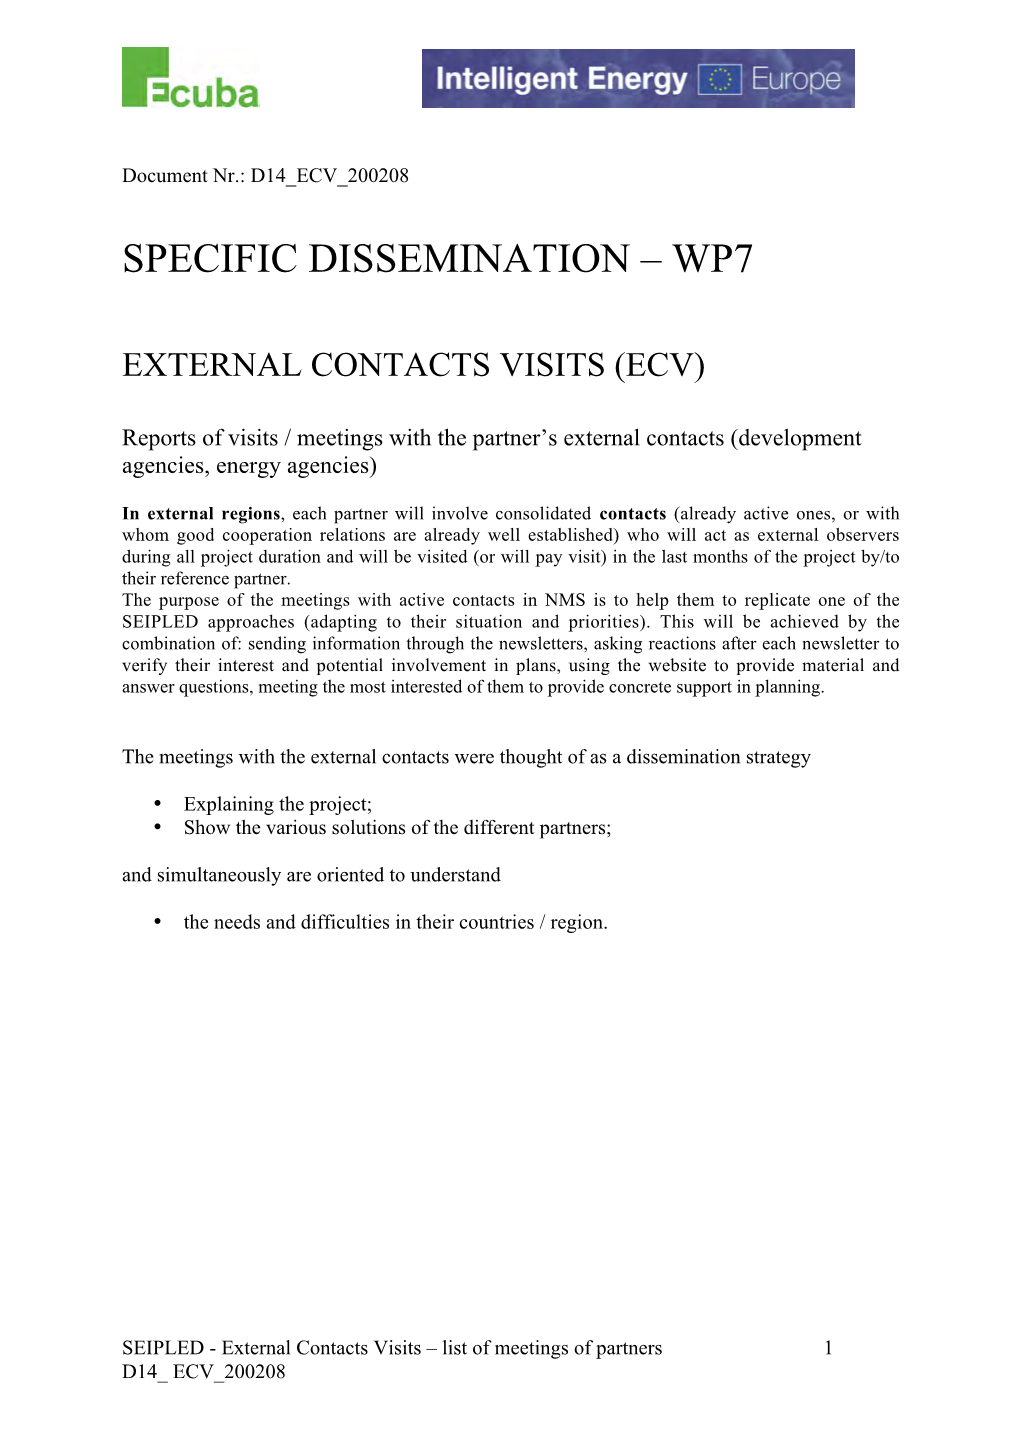 Specific Dissemination – Wp7